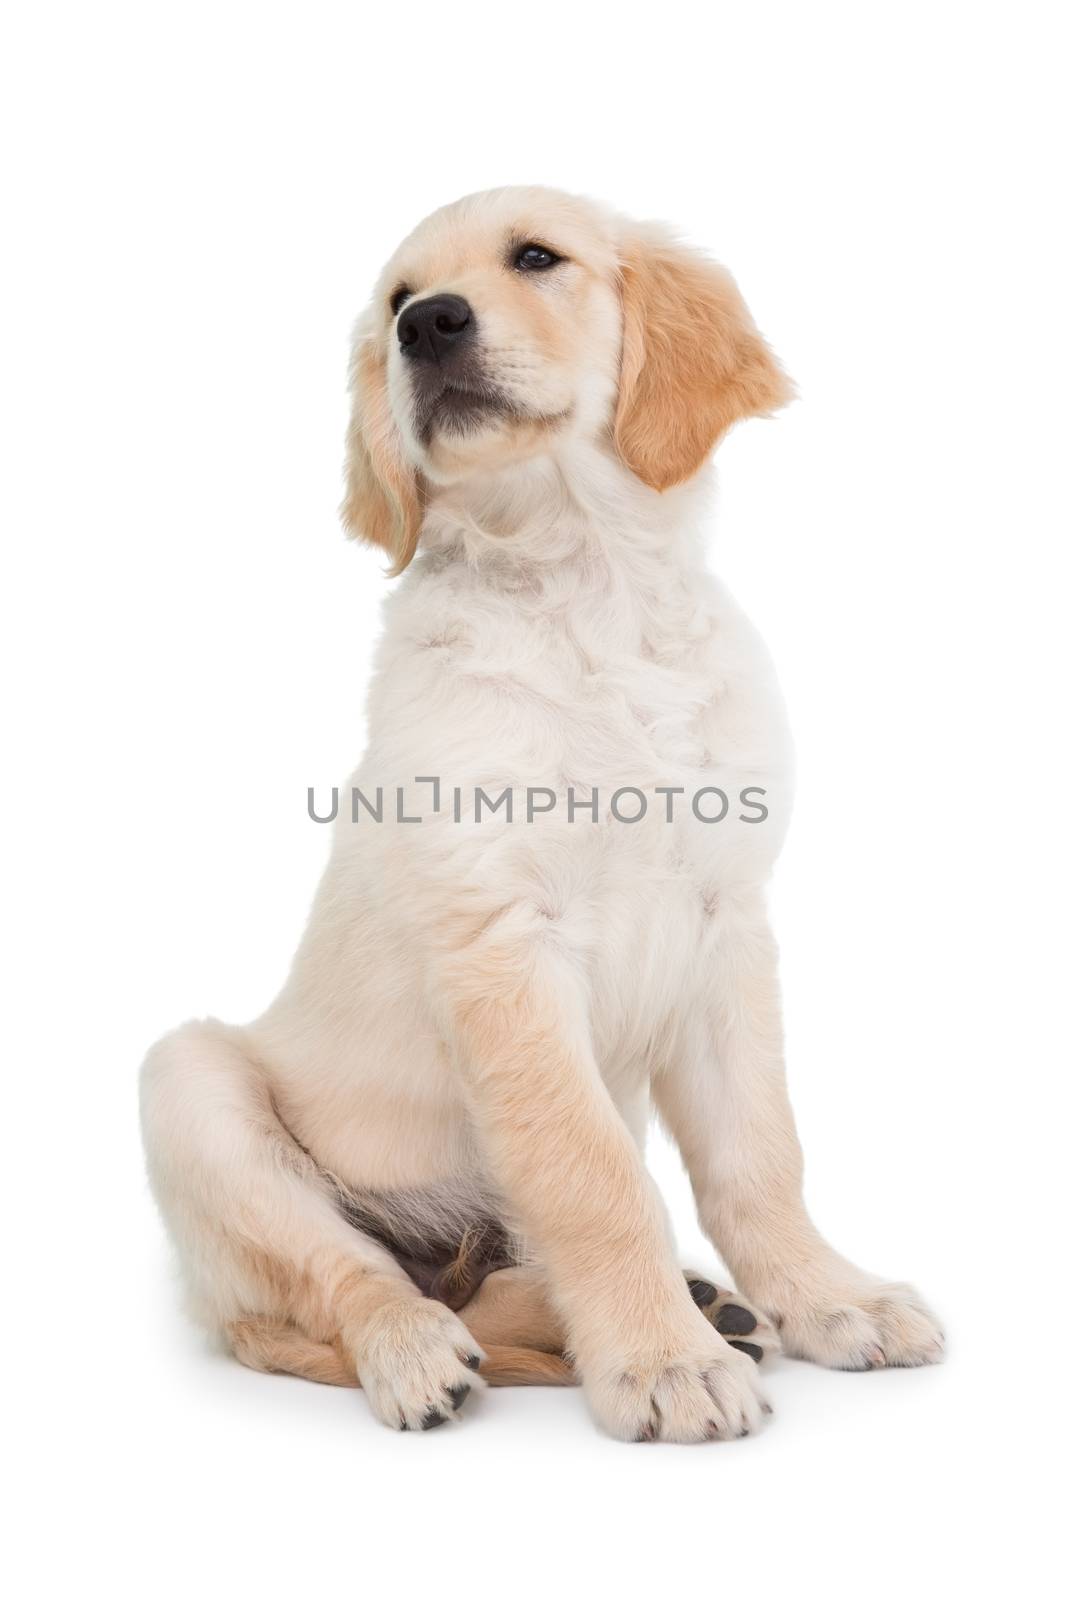 Sitting dog looking up on white background 